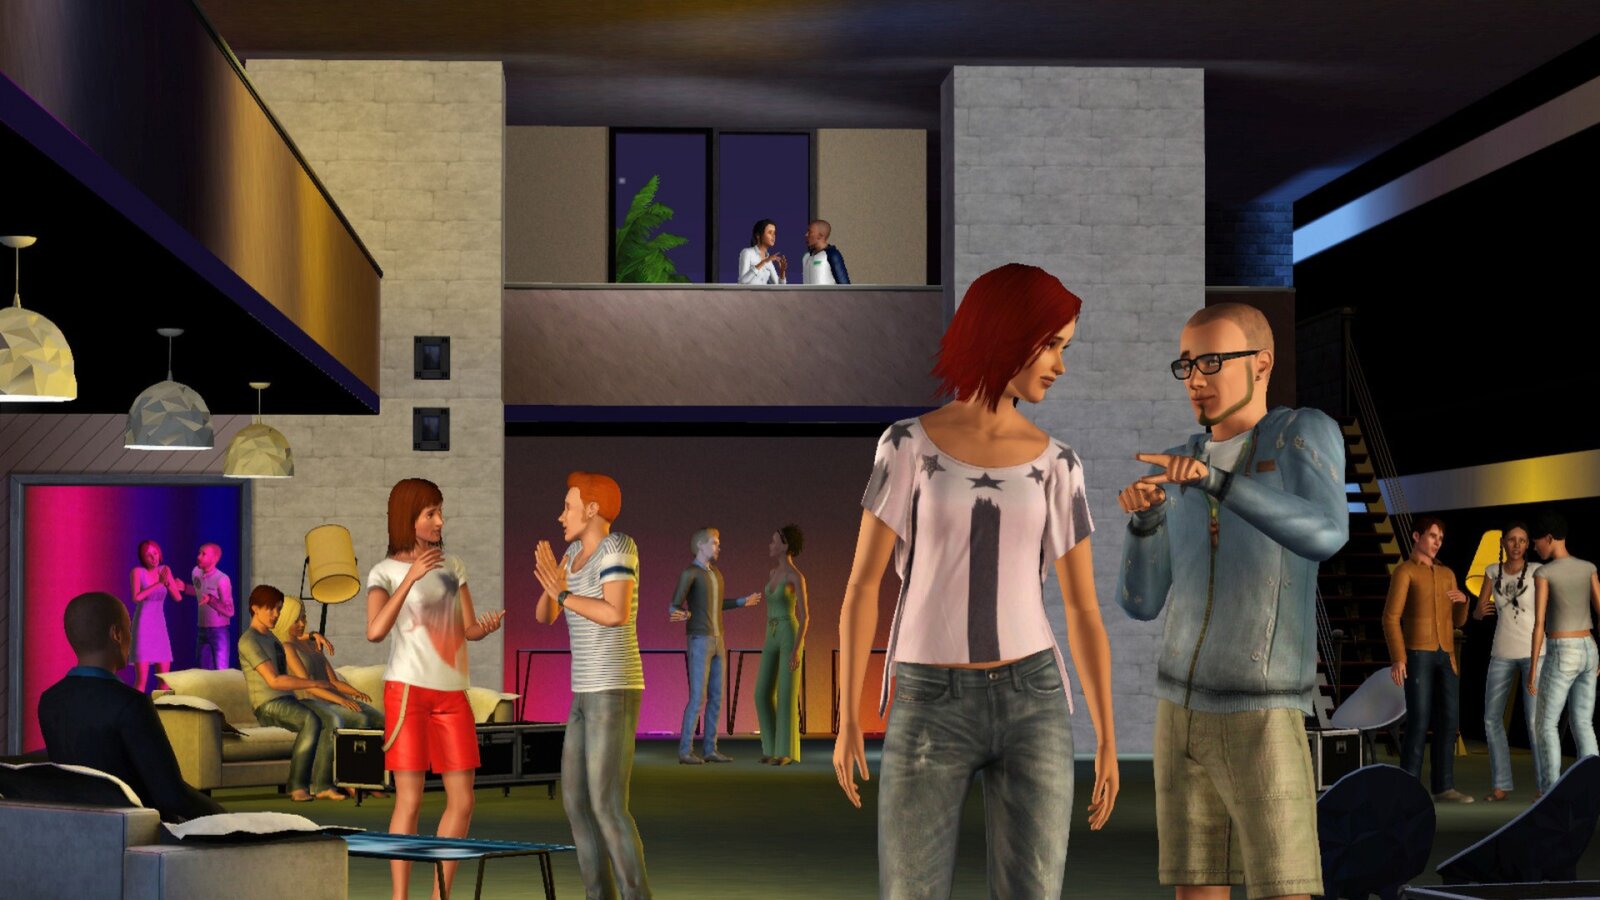 The Sims 3 - Diesel Stuff